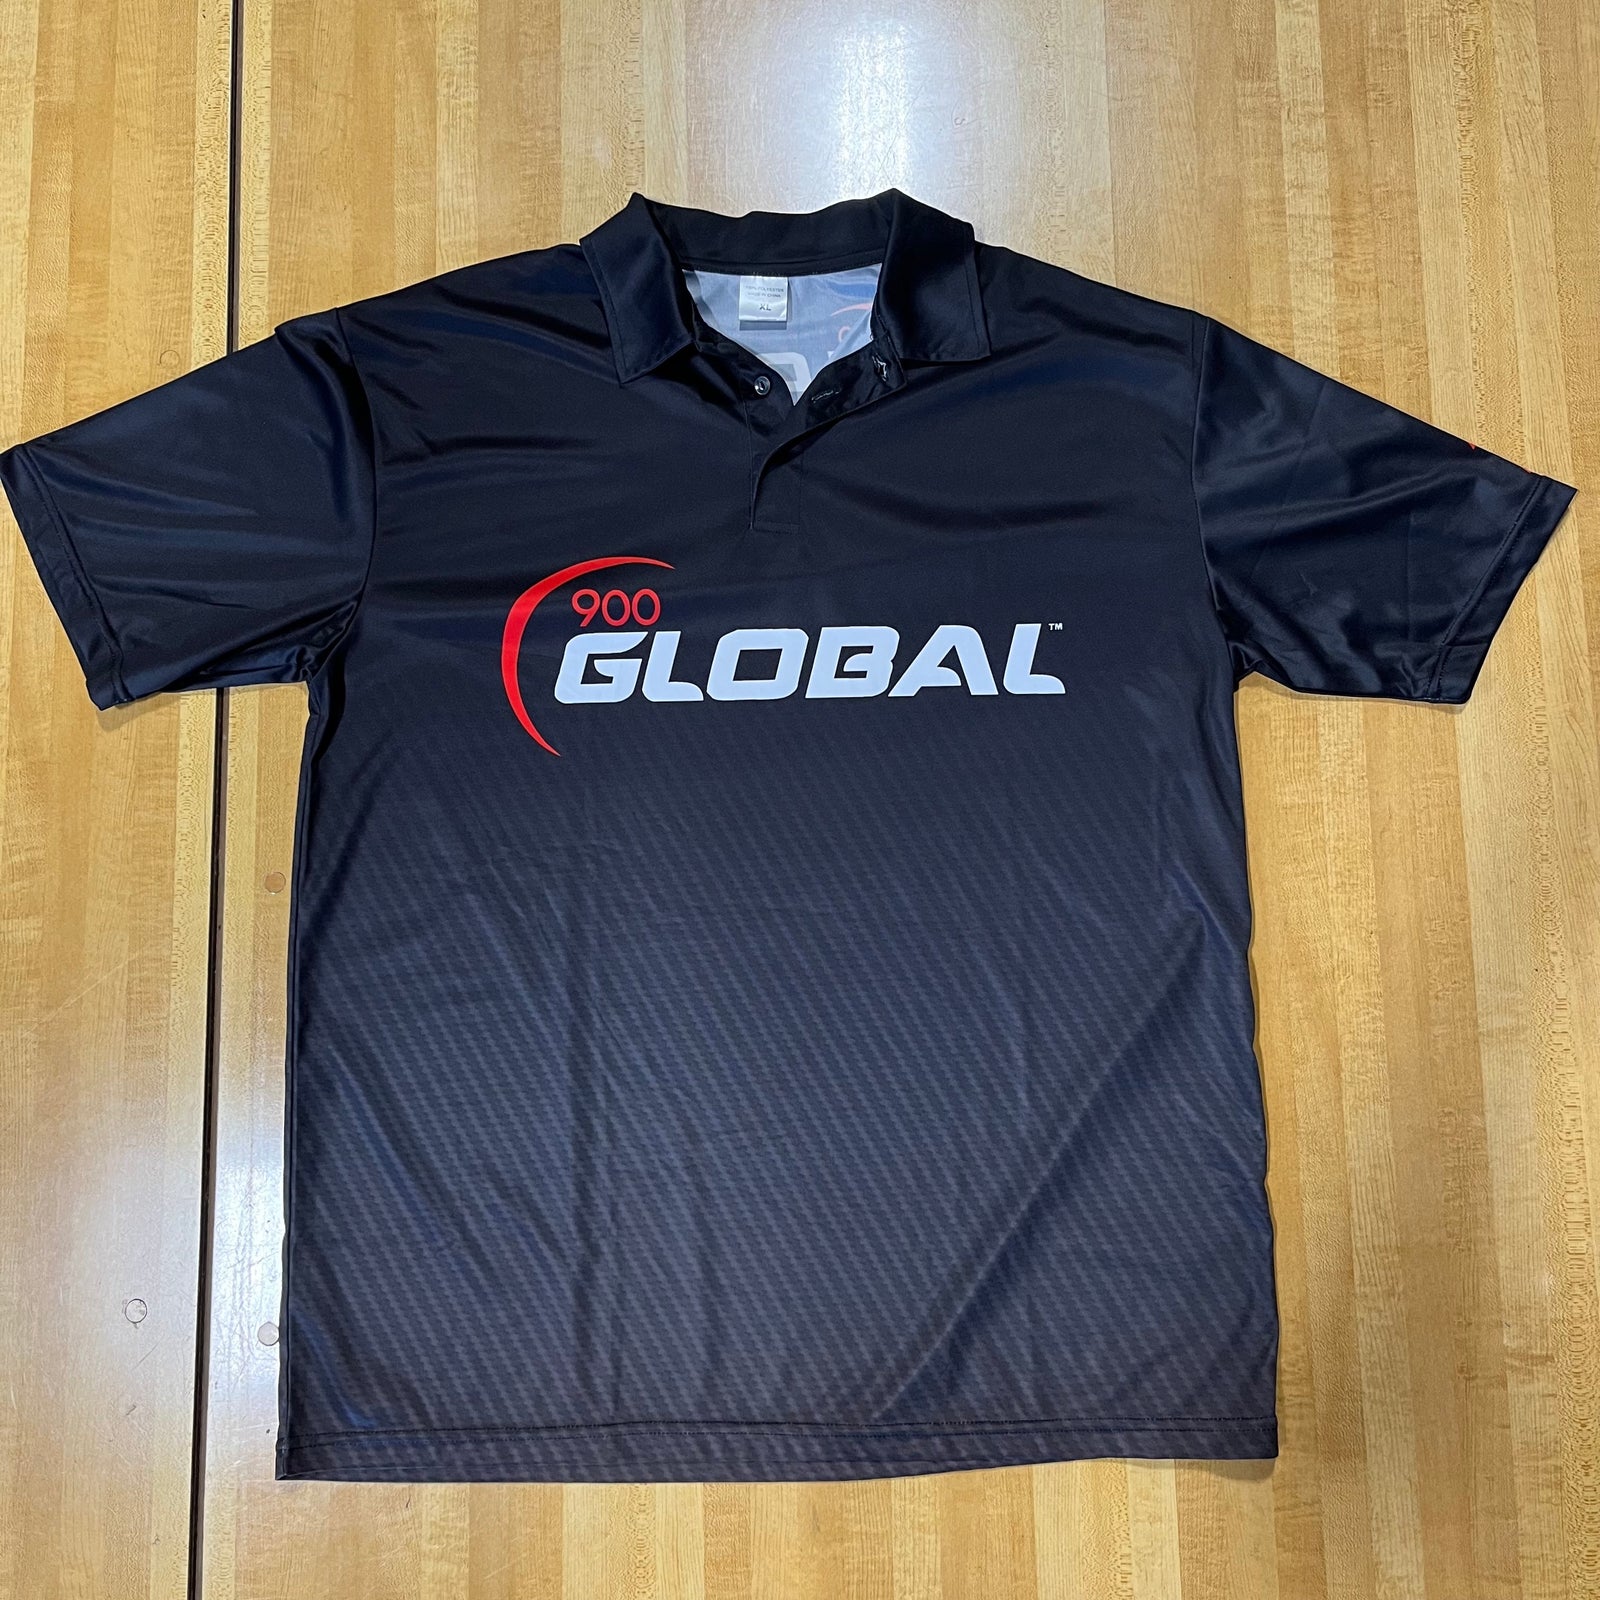 900 Global Polo Black